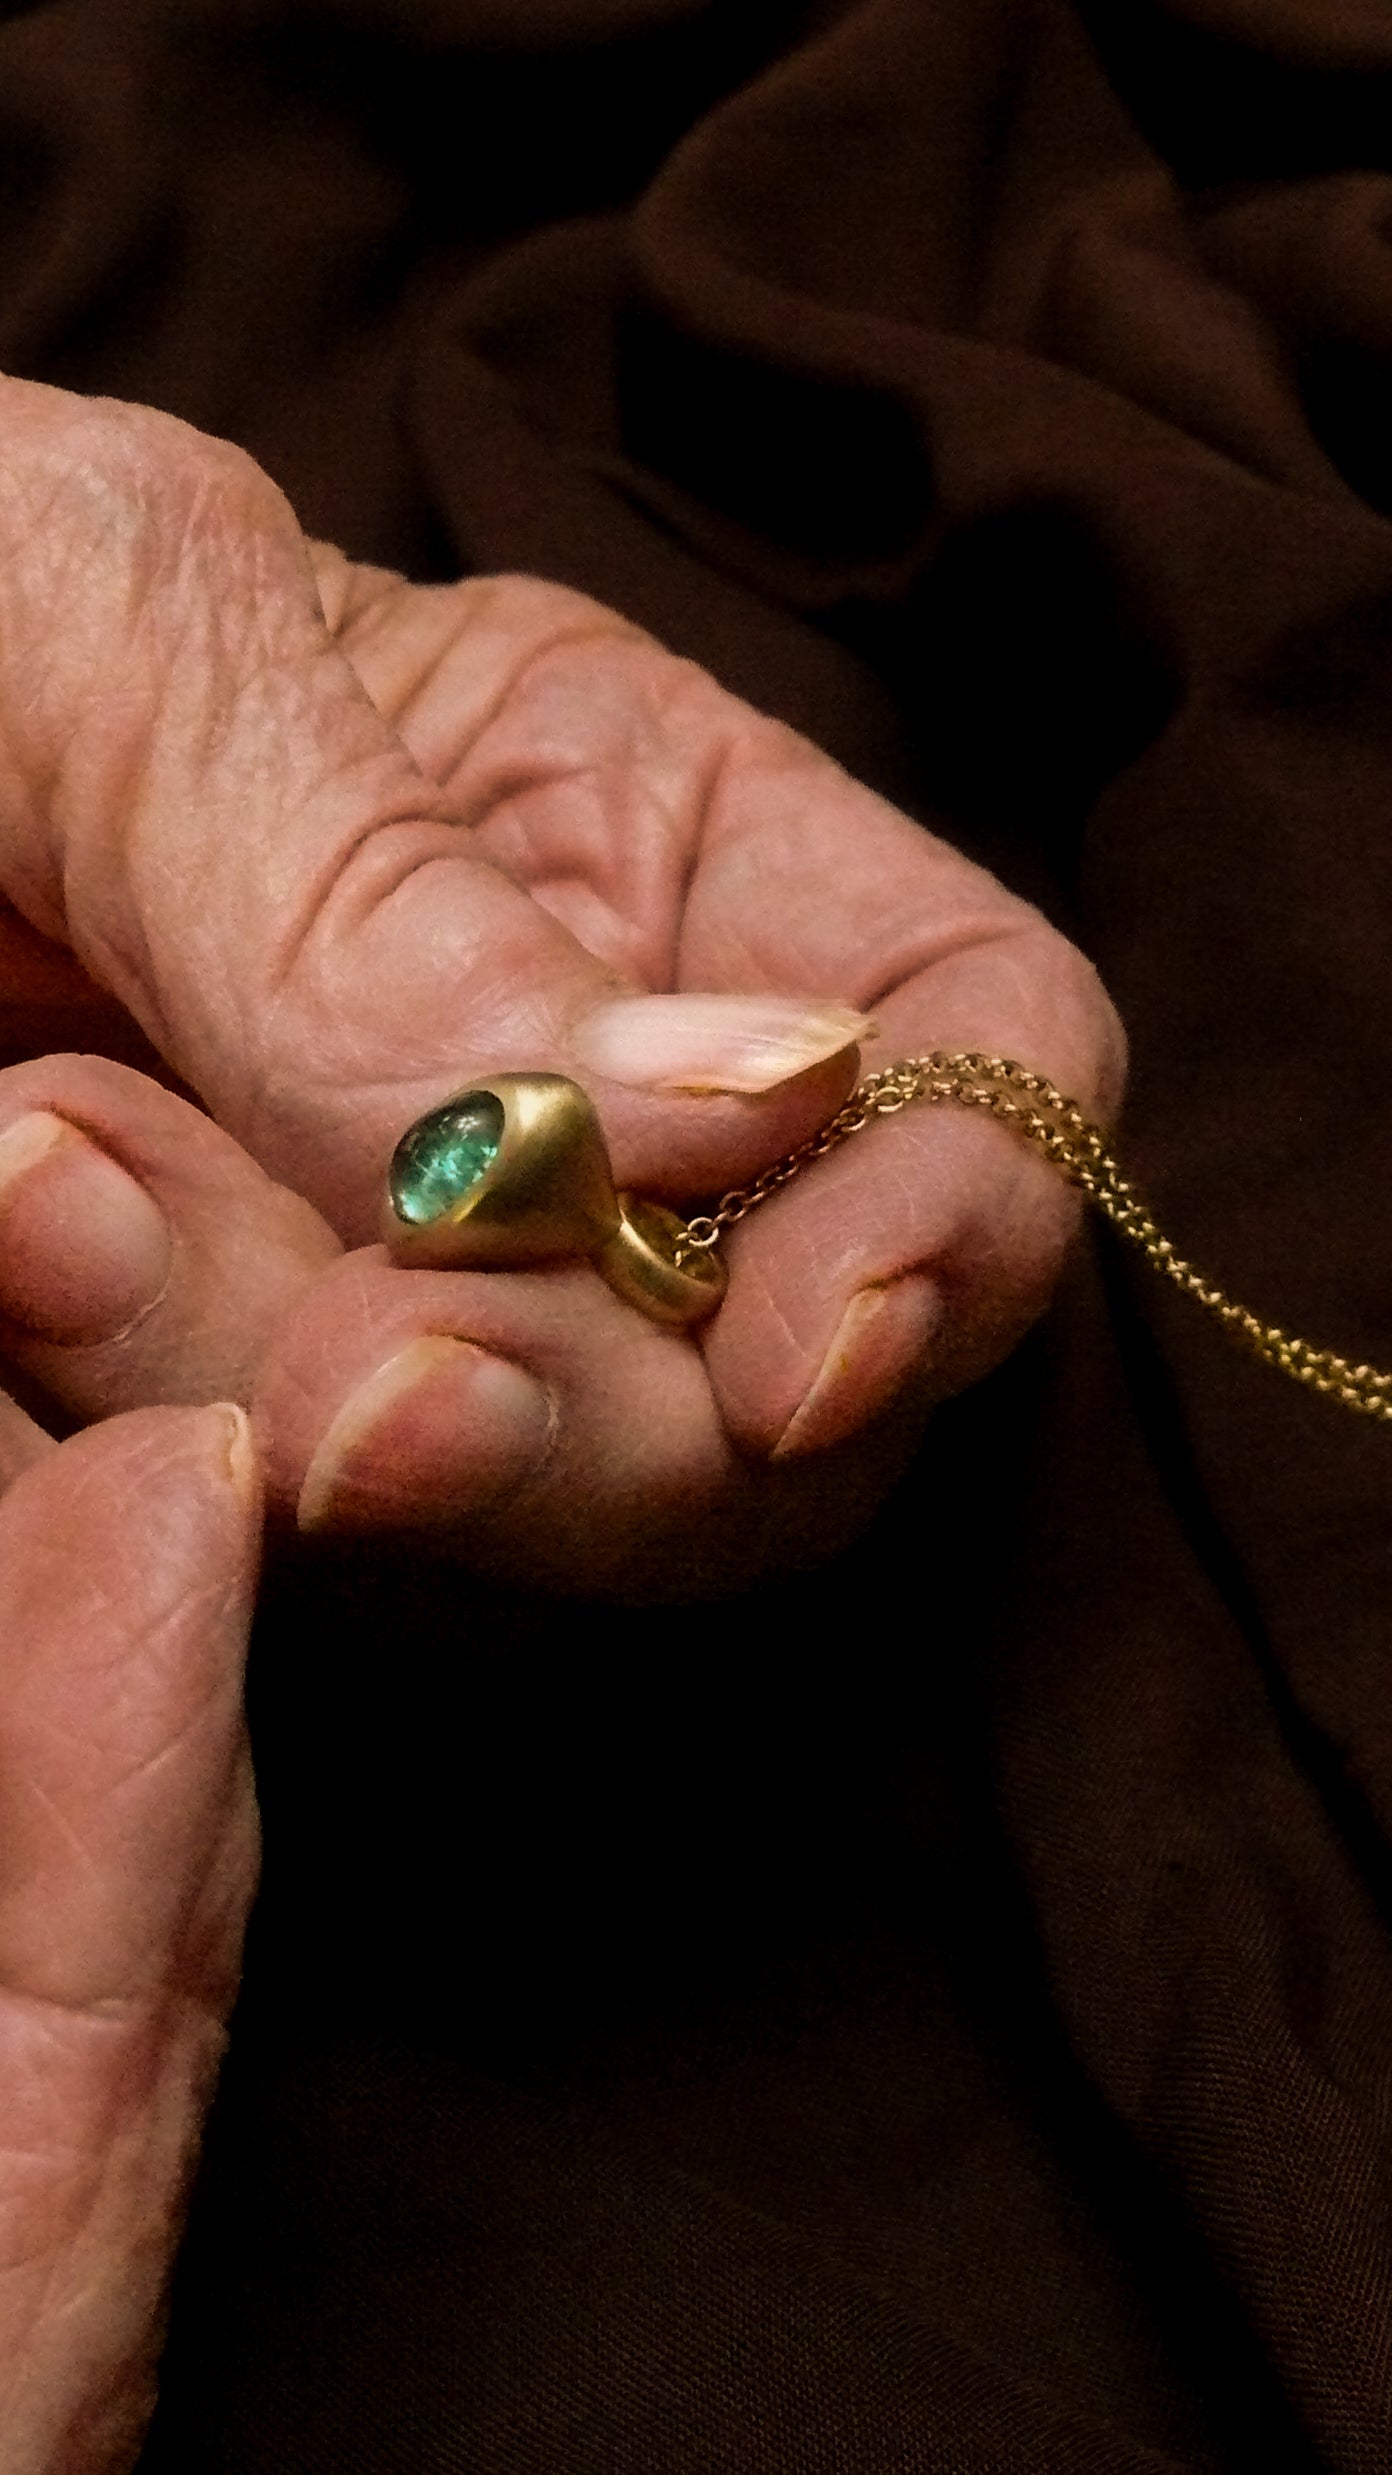 Teal tourmaline pendulum charm in grandma's hands